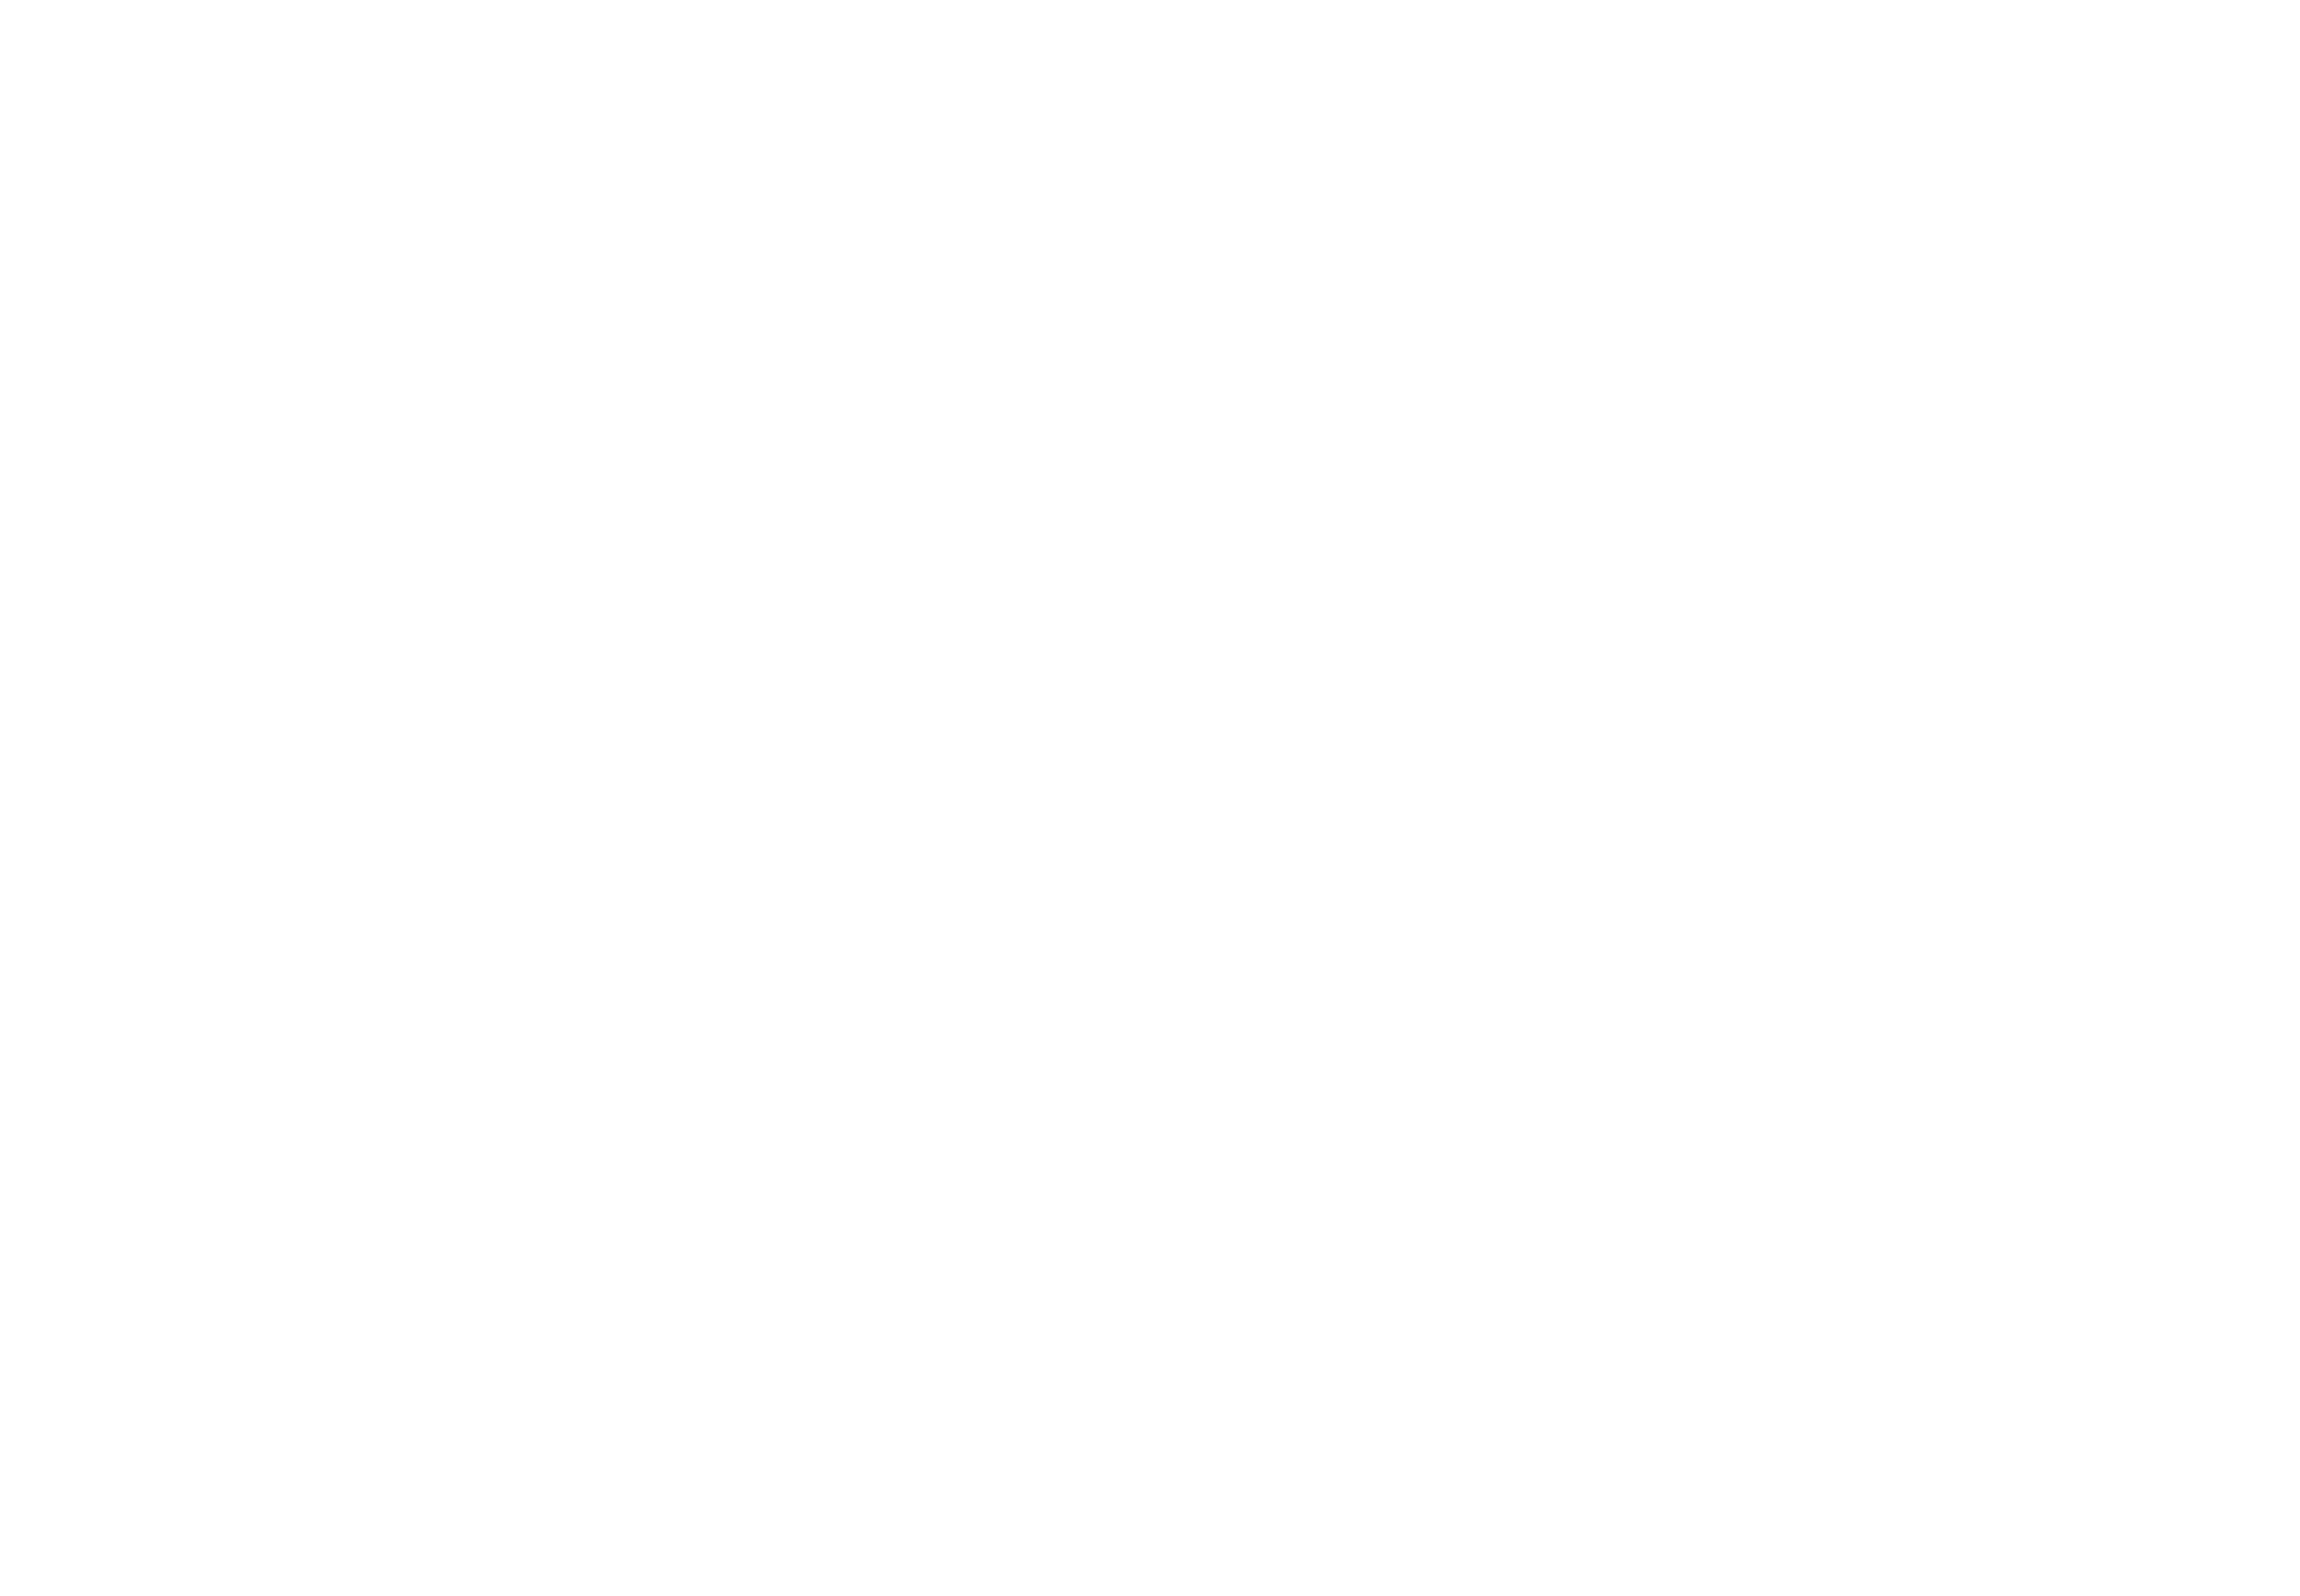 FodaBox scales business through Google Shopping with Bidnamic | Bidnamic